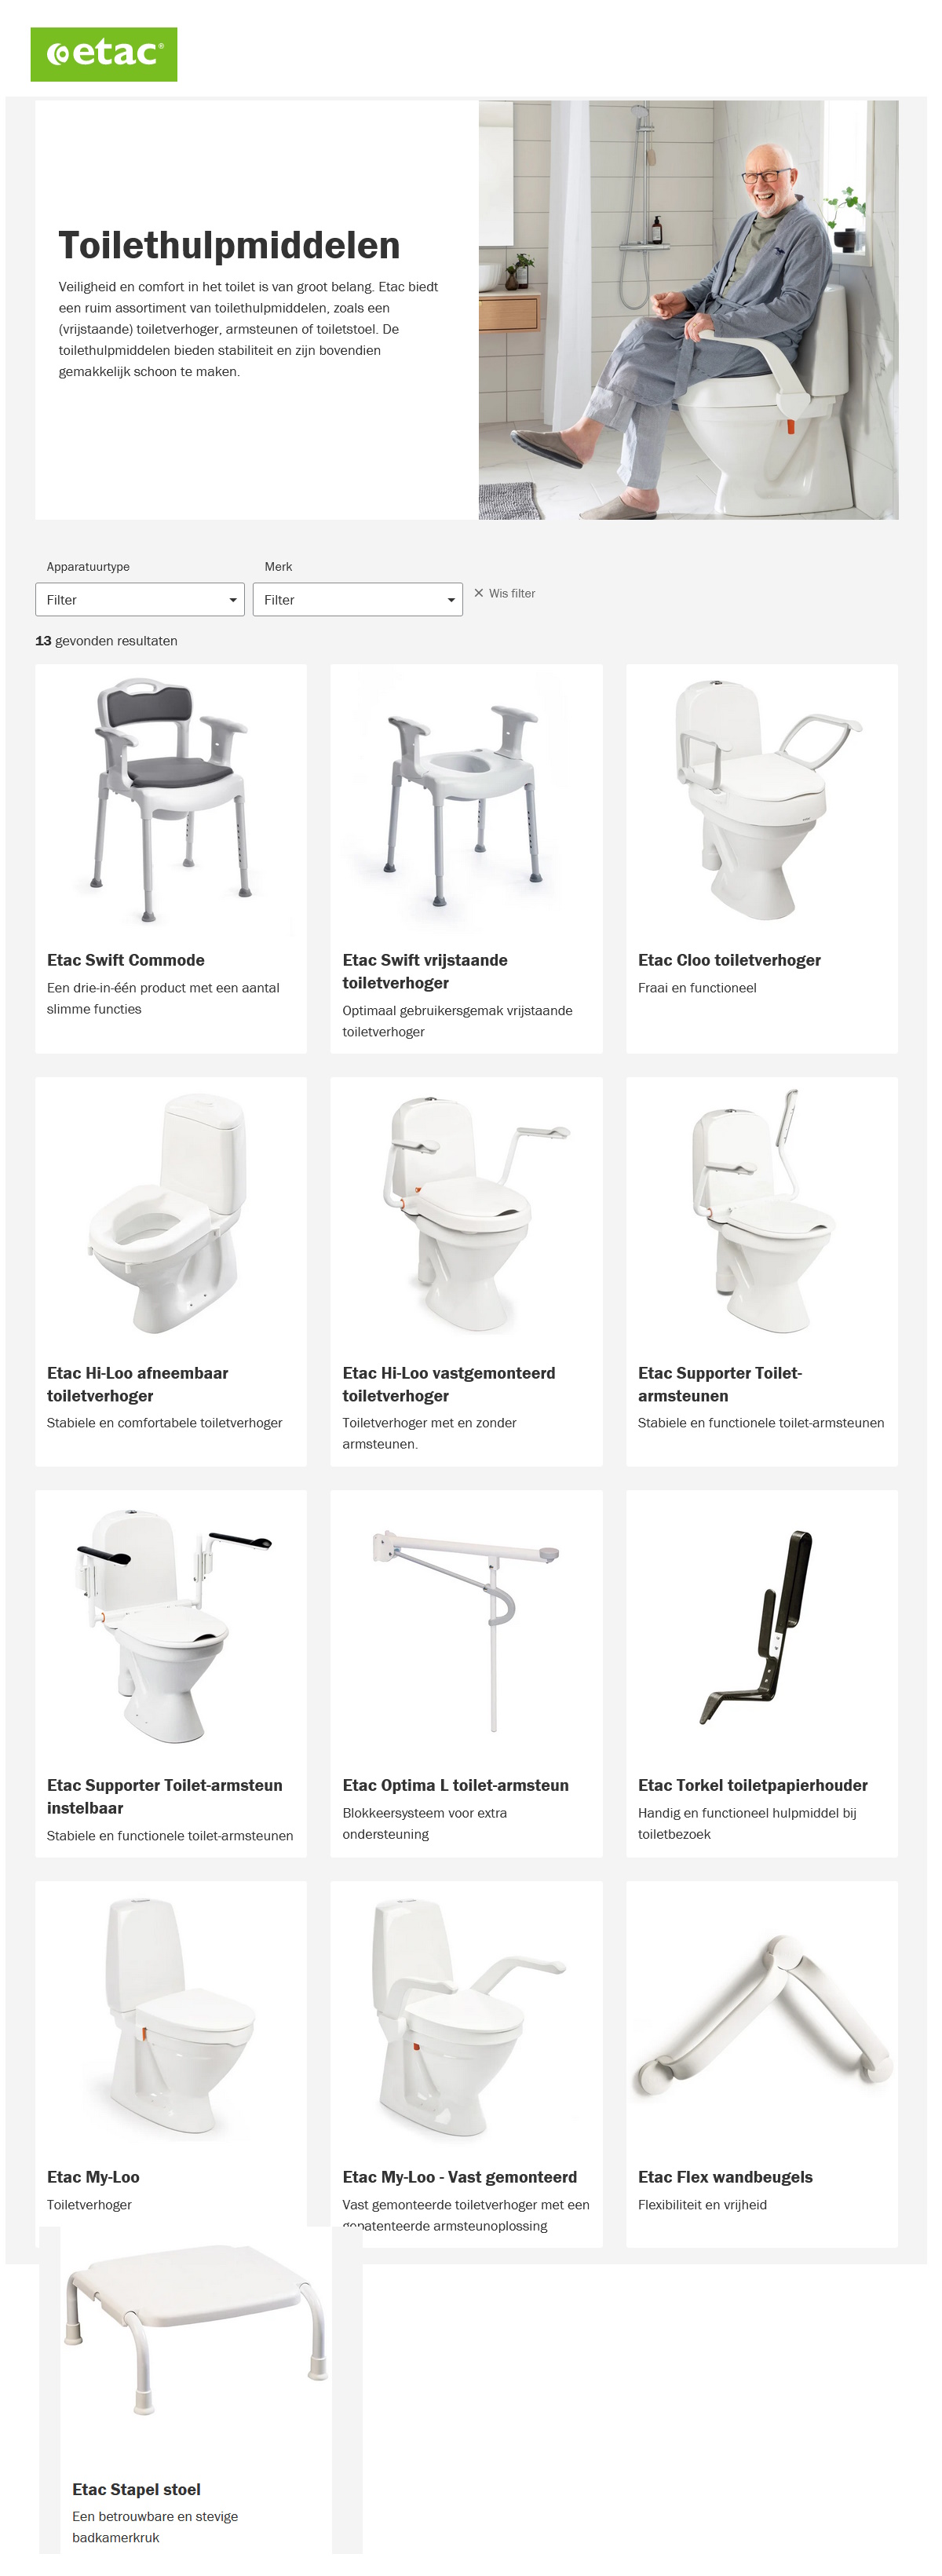 toegevoegd document 5 van Swift Commode toiletstoel  